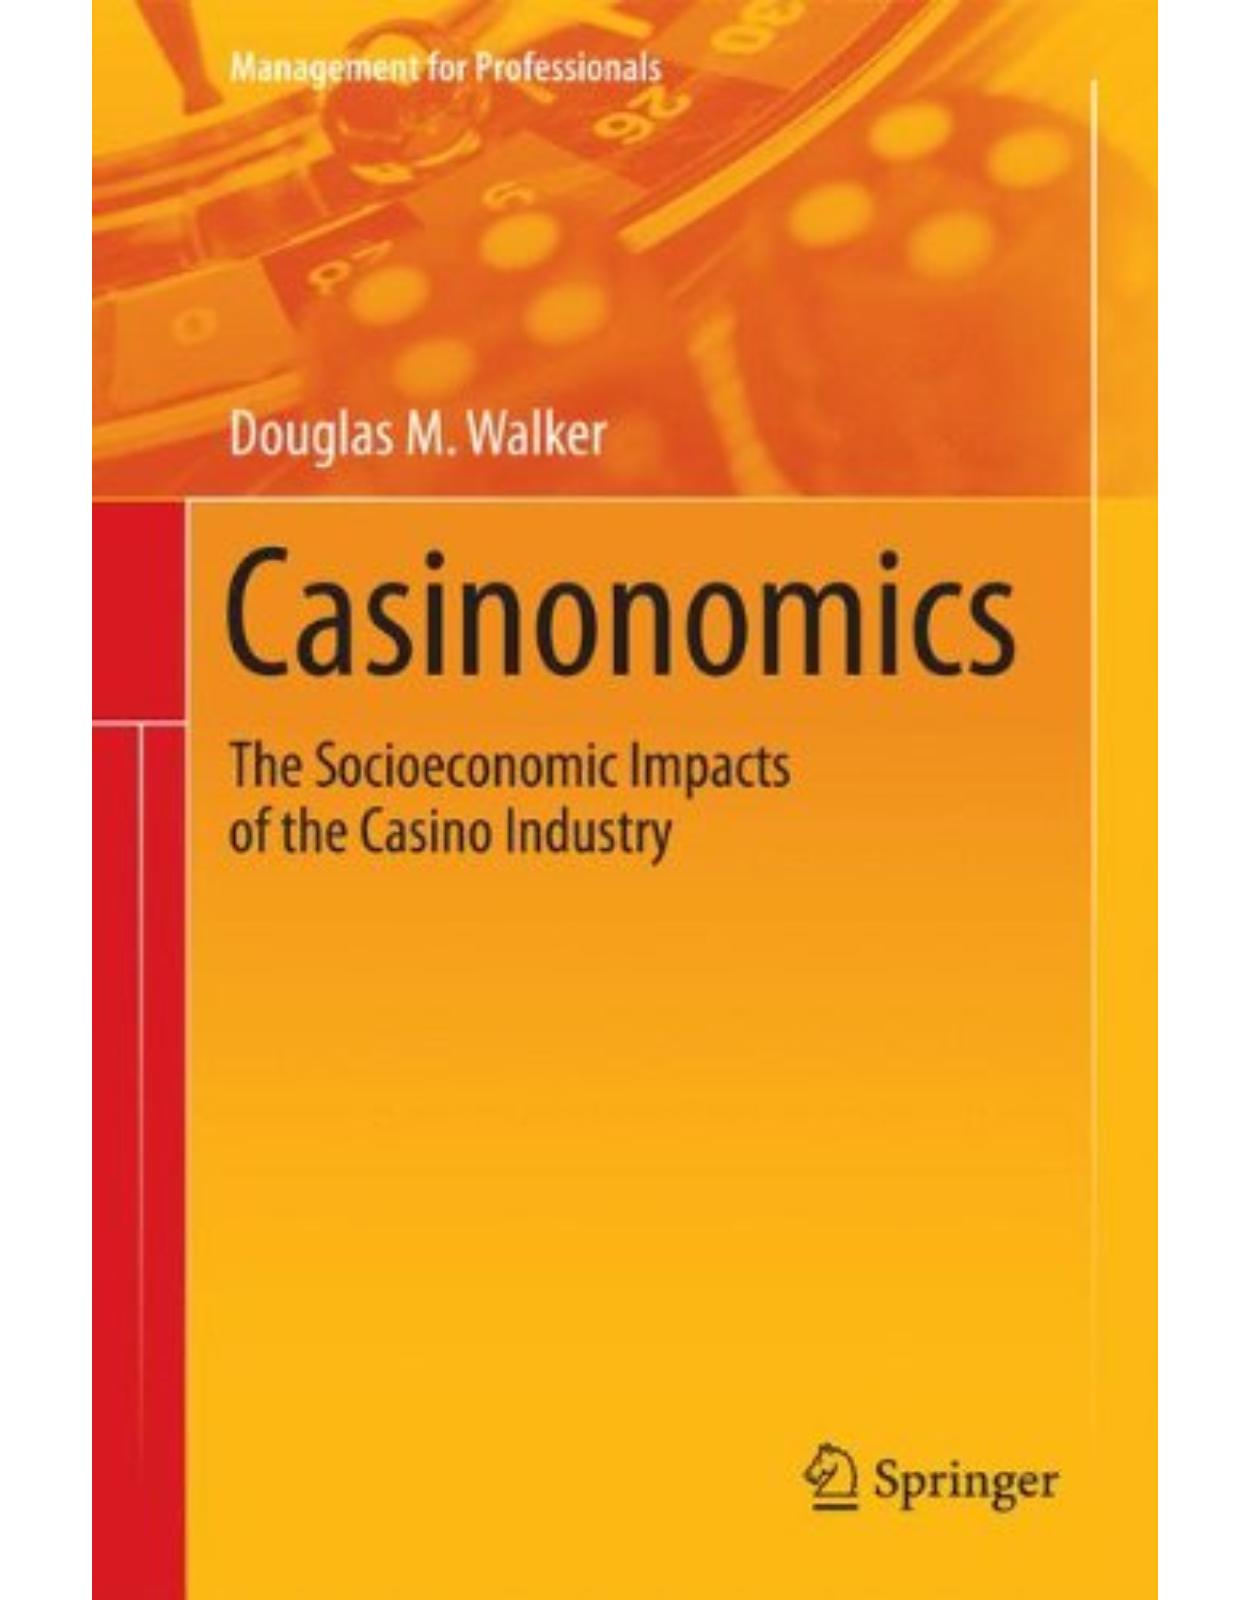 Casinonomics: The Socioeconomic Impacts of the Casino Industry (Management for Professionals)